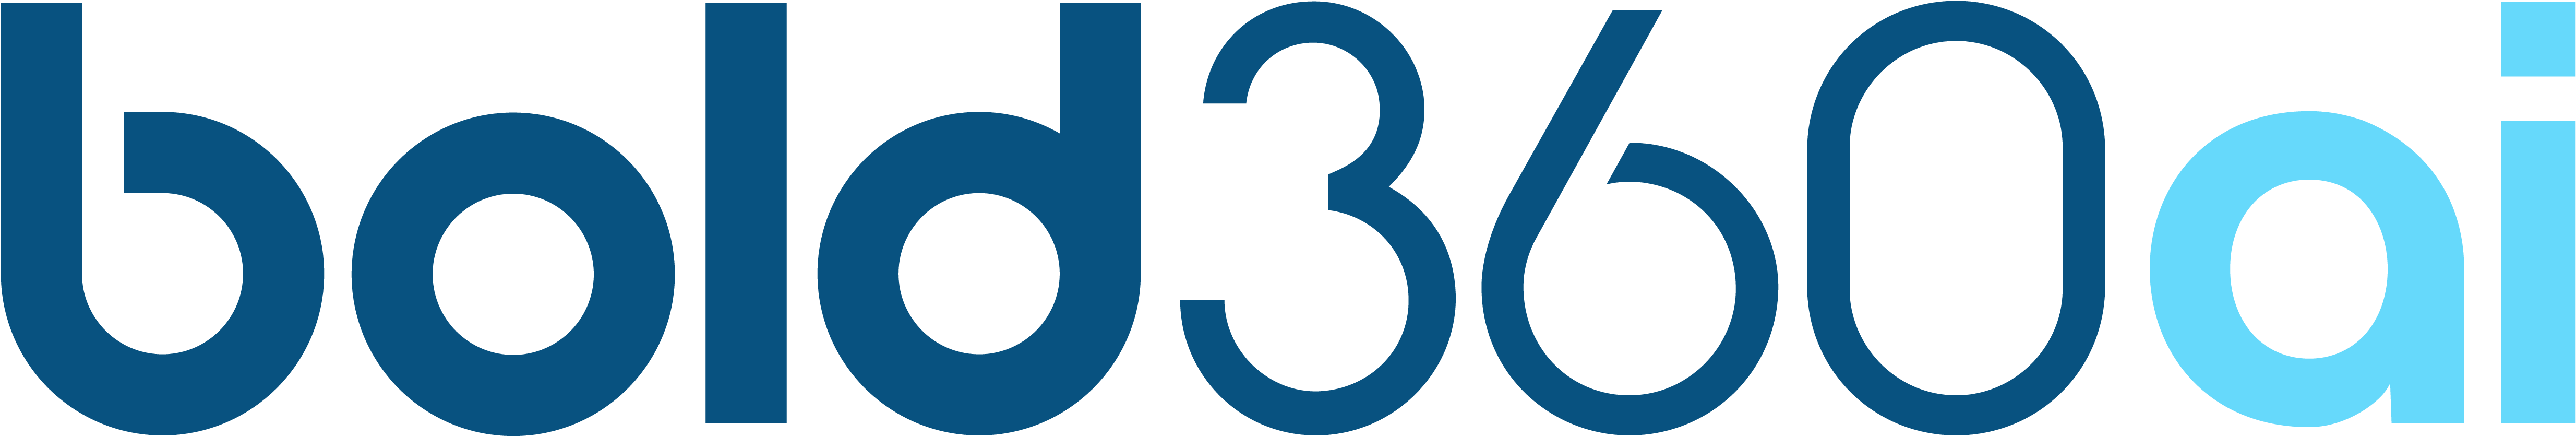 Agenda - Bold 360 Logo (5006x889)